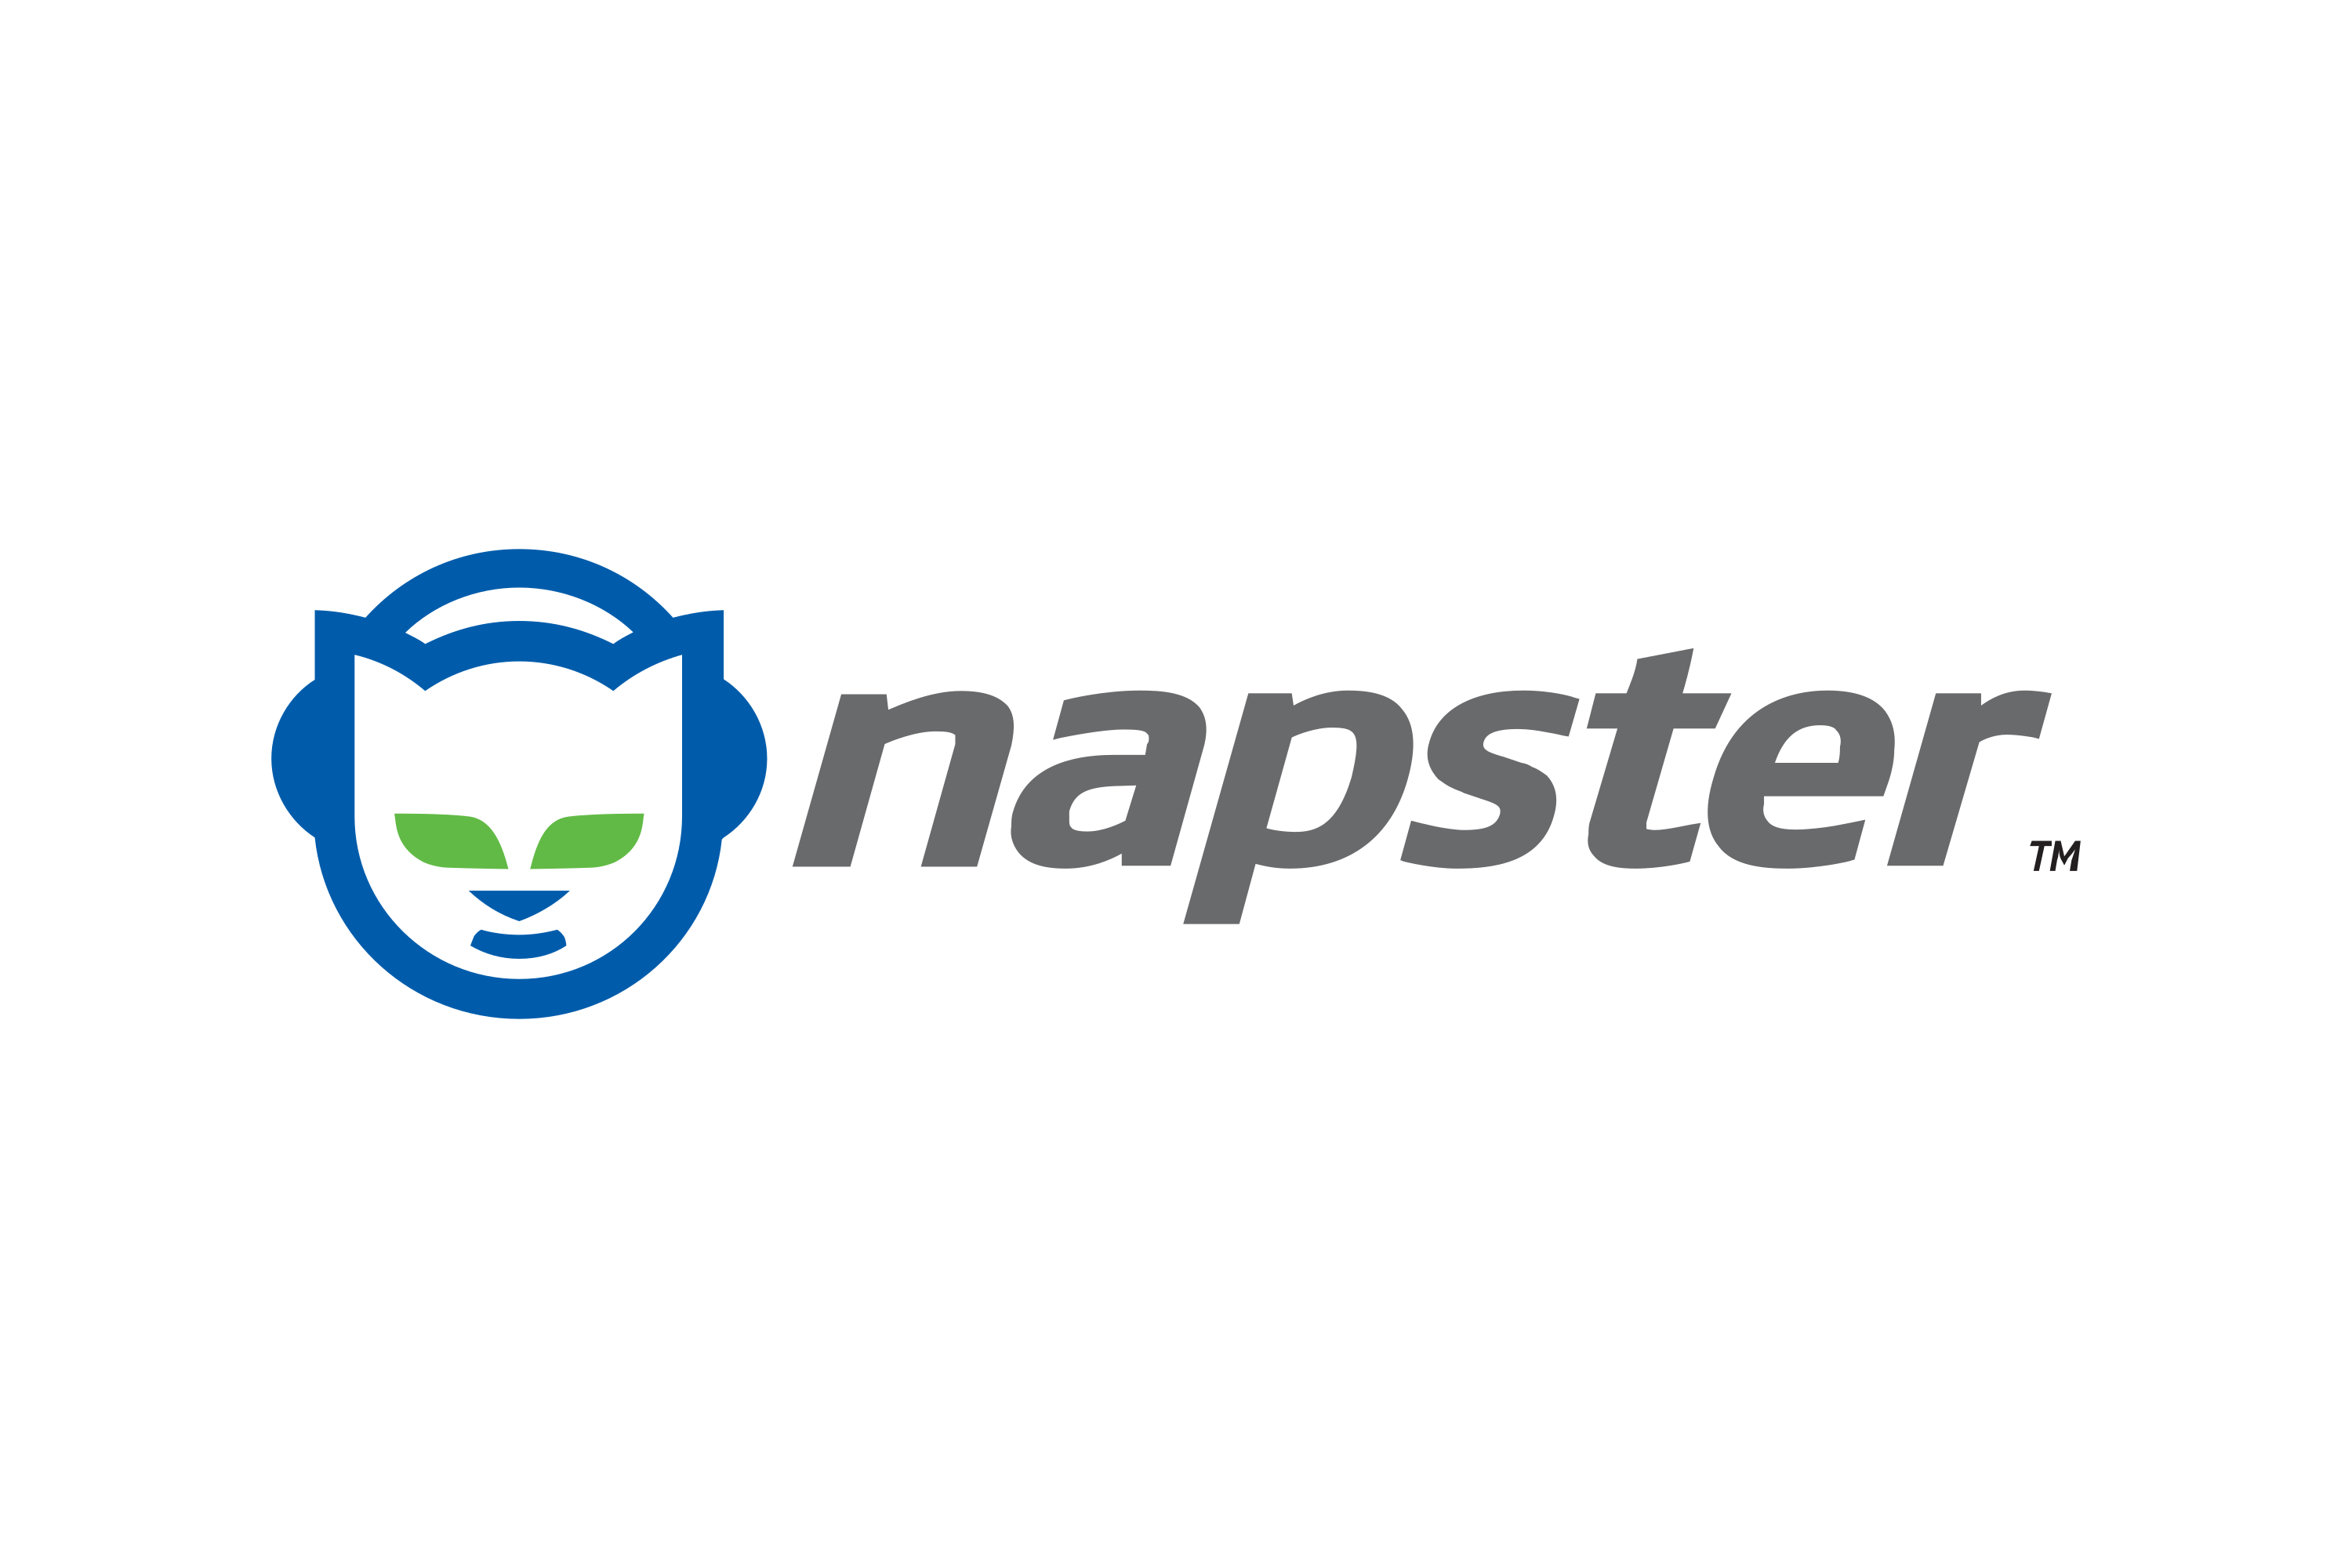 Download Napster Logo in SVG Vector or PNG File Format - Logo.wine